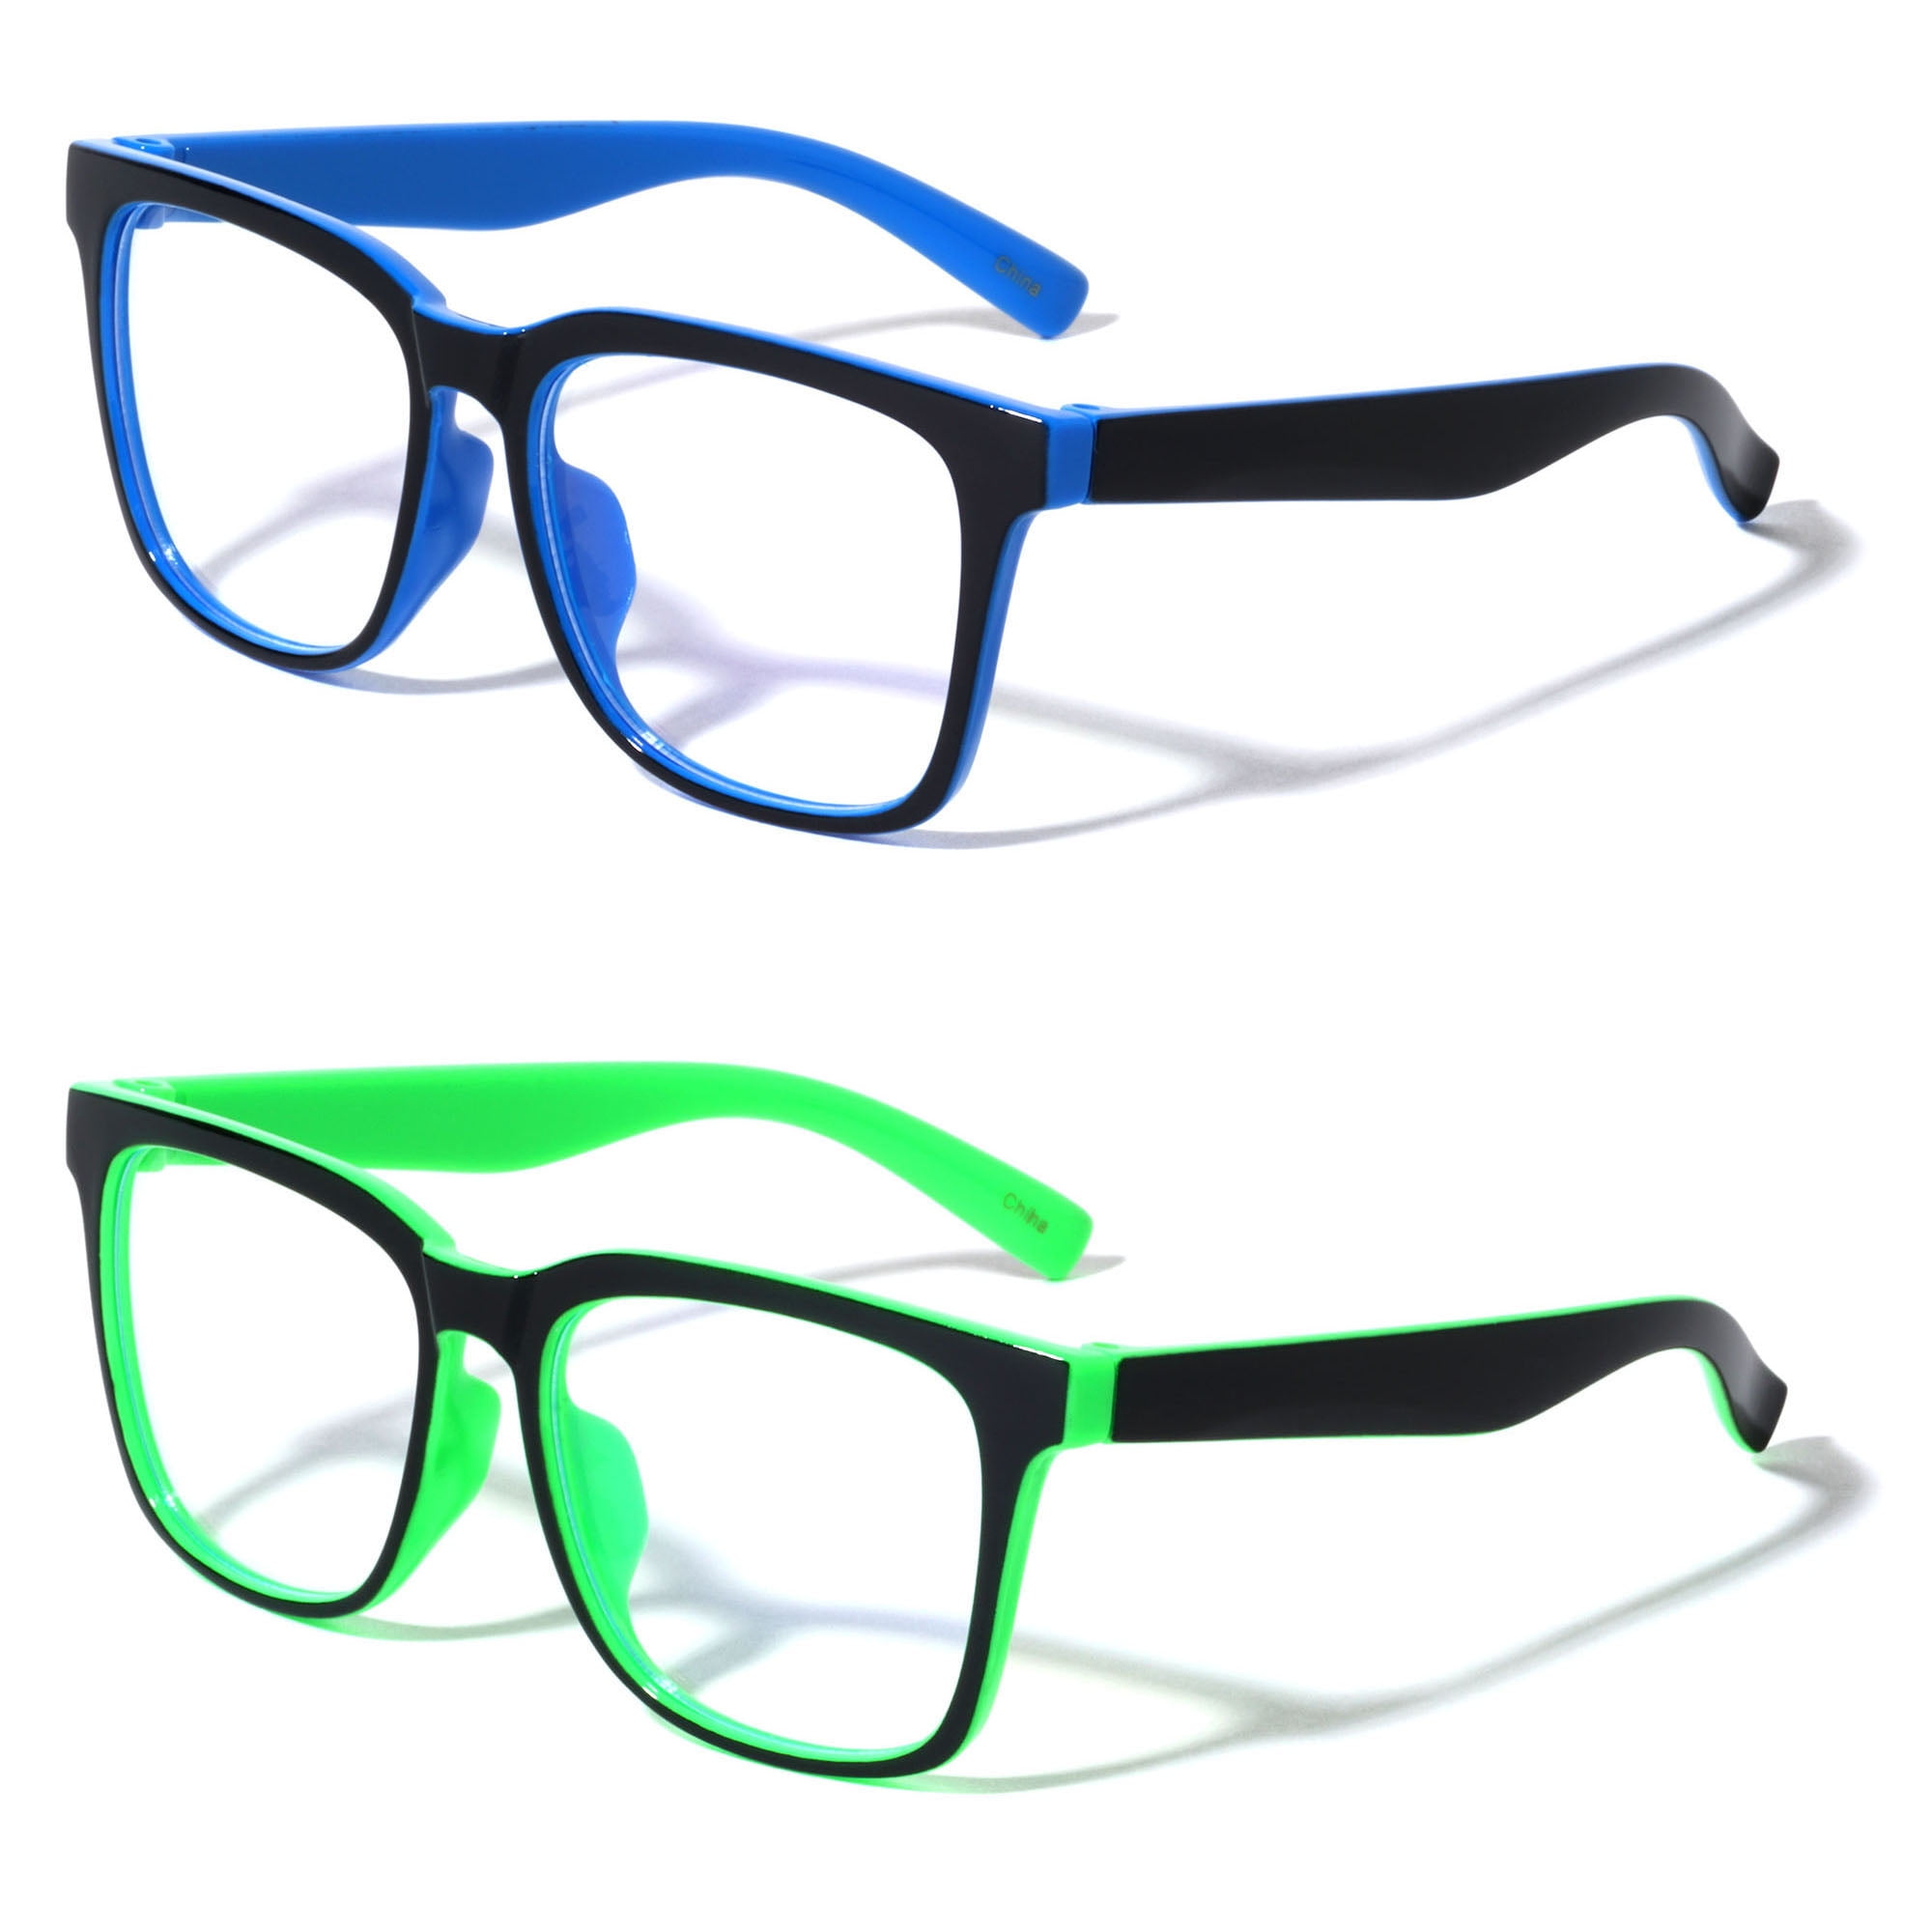 2 Pack Blue Light Blocking Glasses Smartphone Men & Women Anti Blue-ray Eyeglasses for Computer Console Gaming Reduce Eyestrain TV Set of 2, 2 Colors